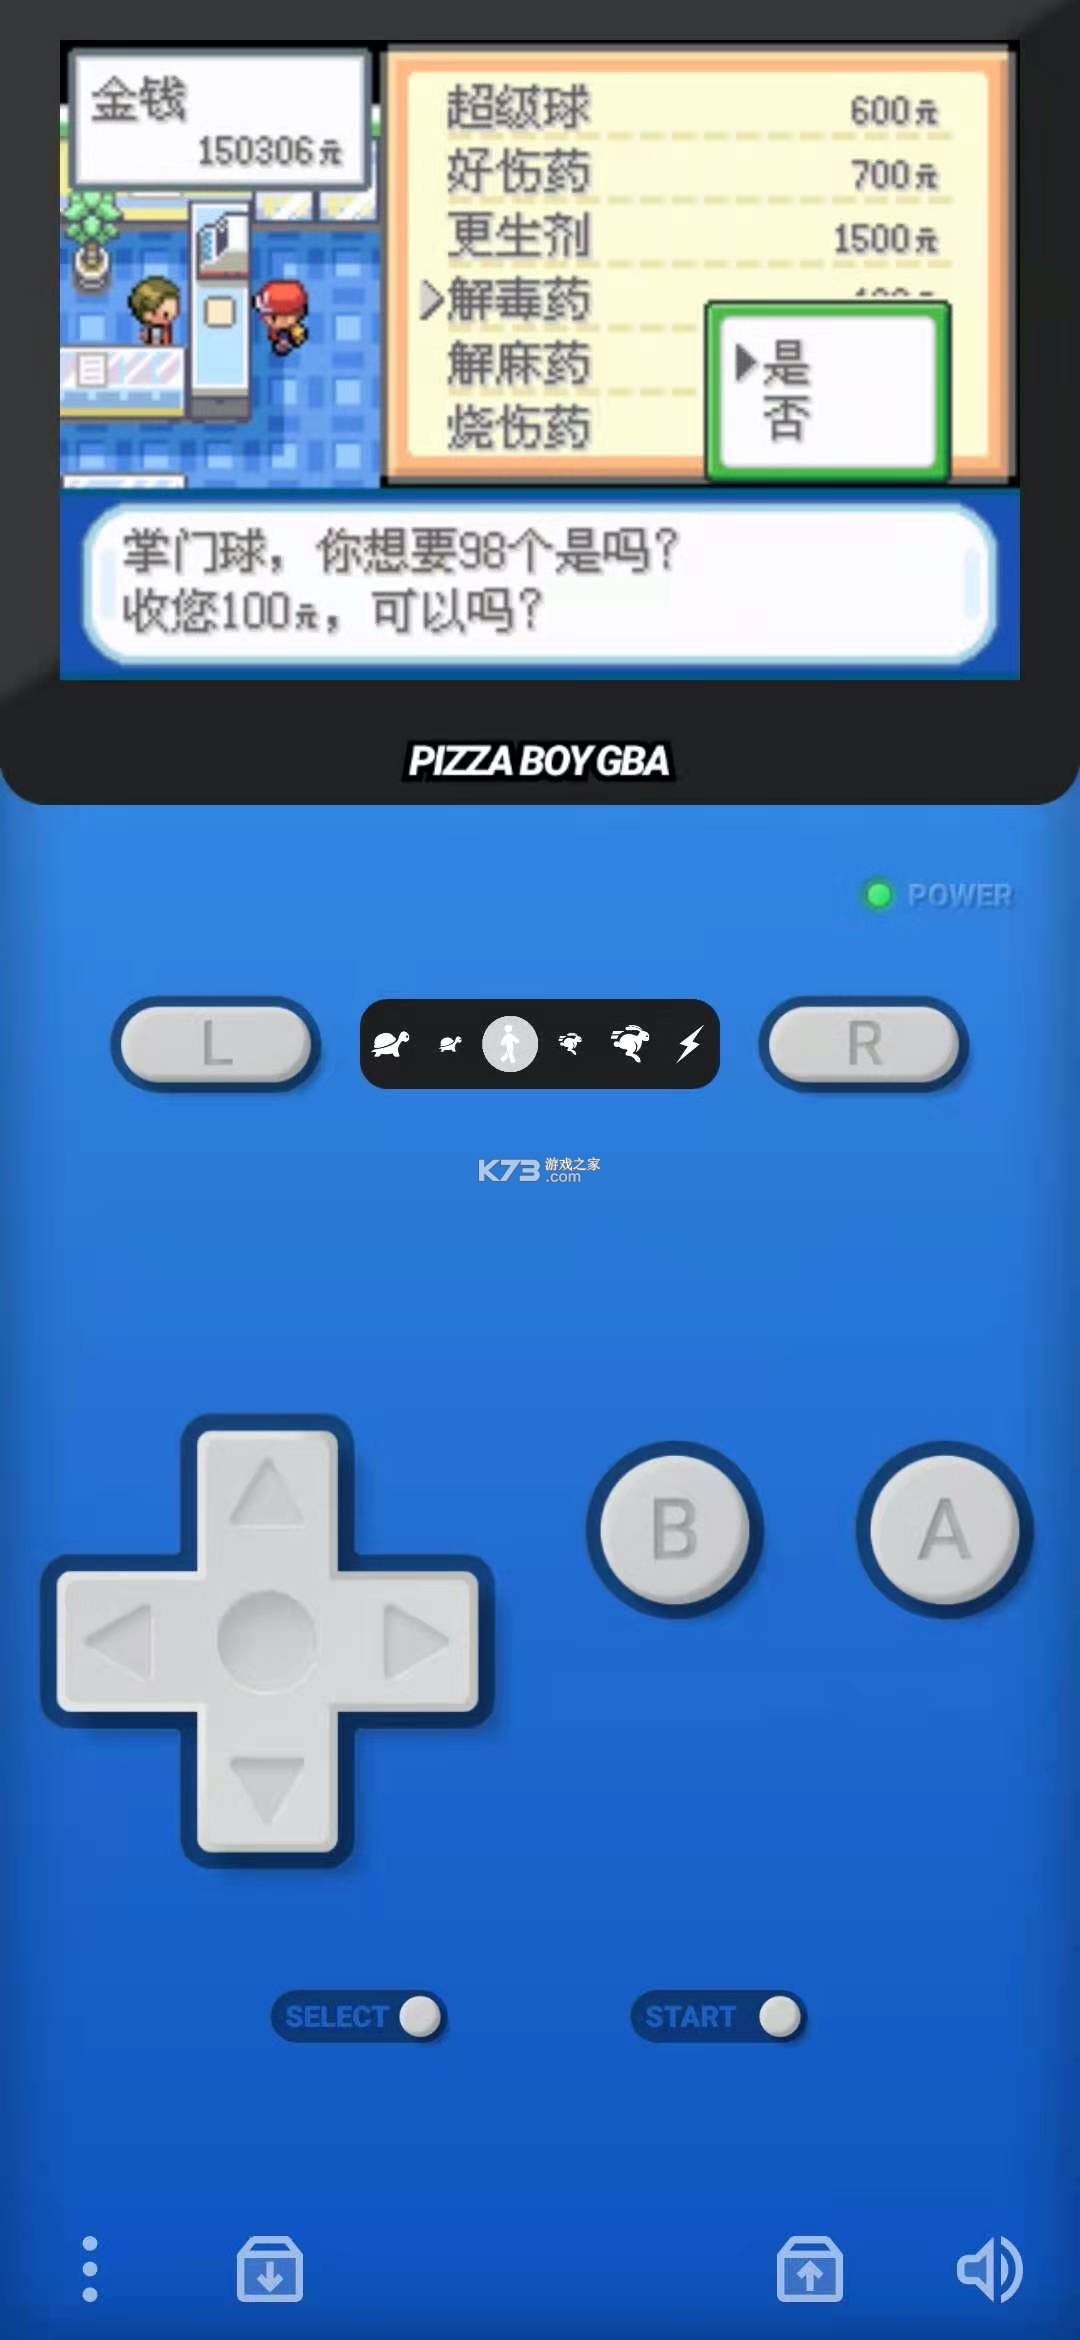 Pizza Boy GBA模拟器 v2.6.10 完美汉化版